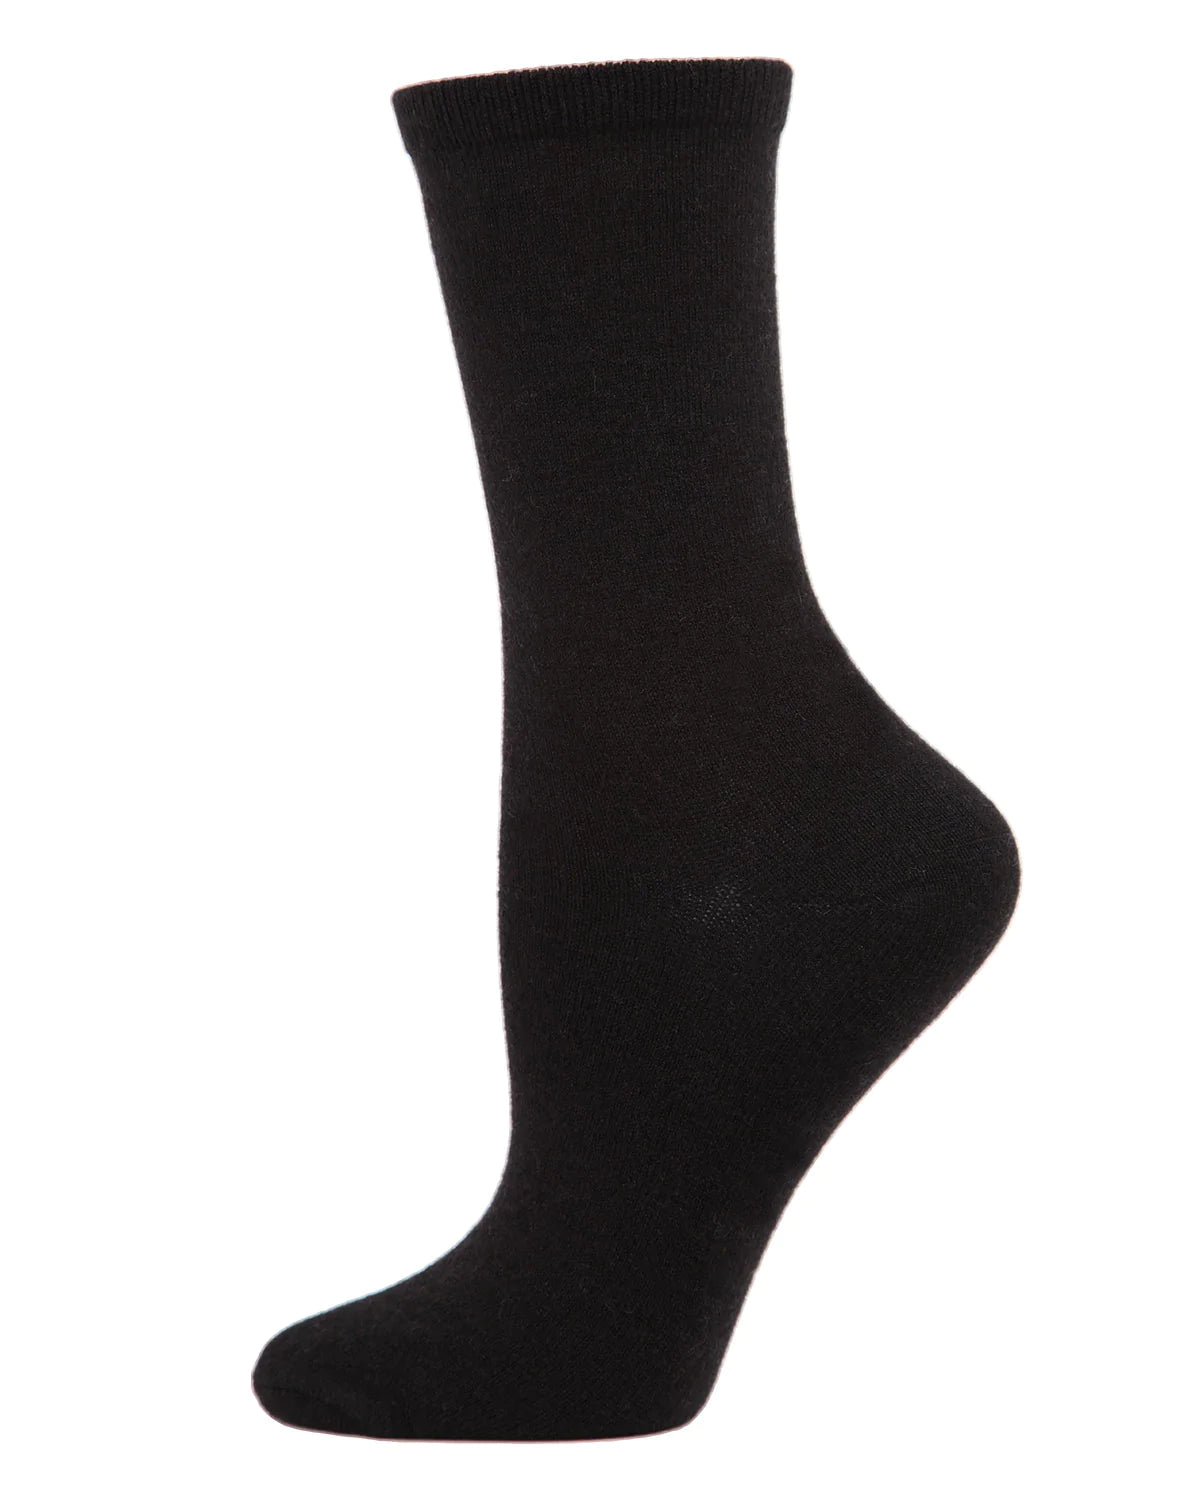 Cashmere Blend Crew Socks - Black